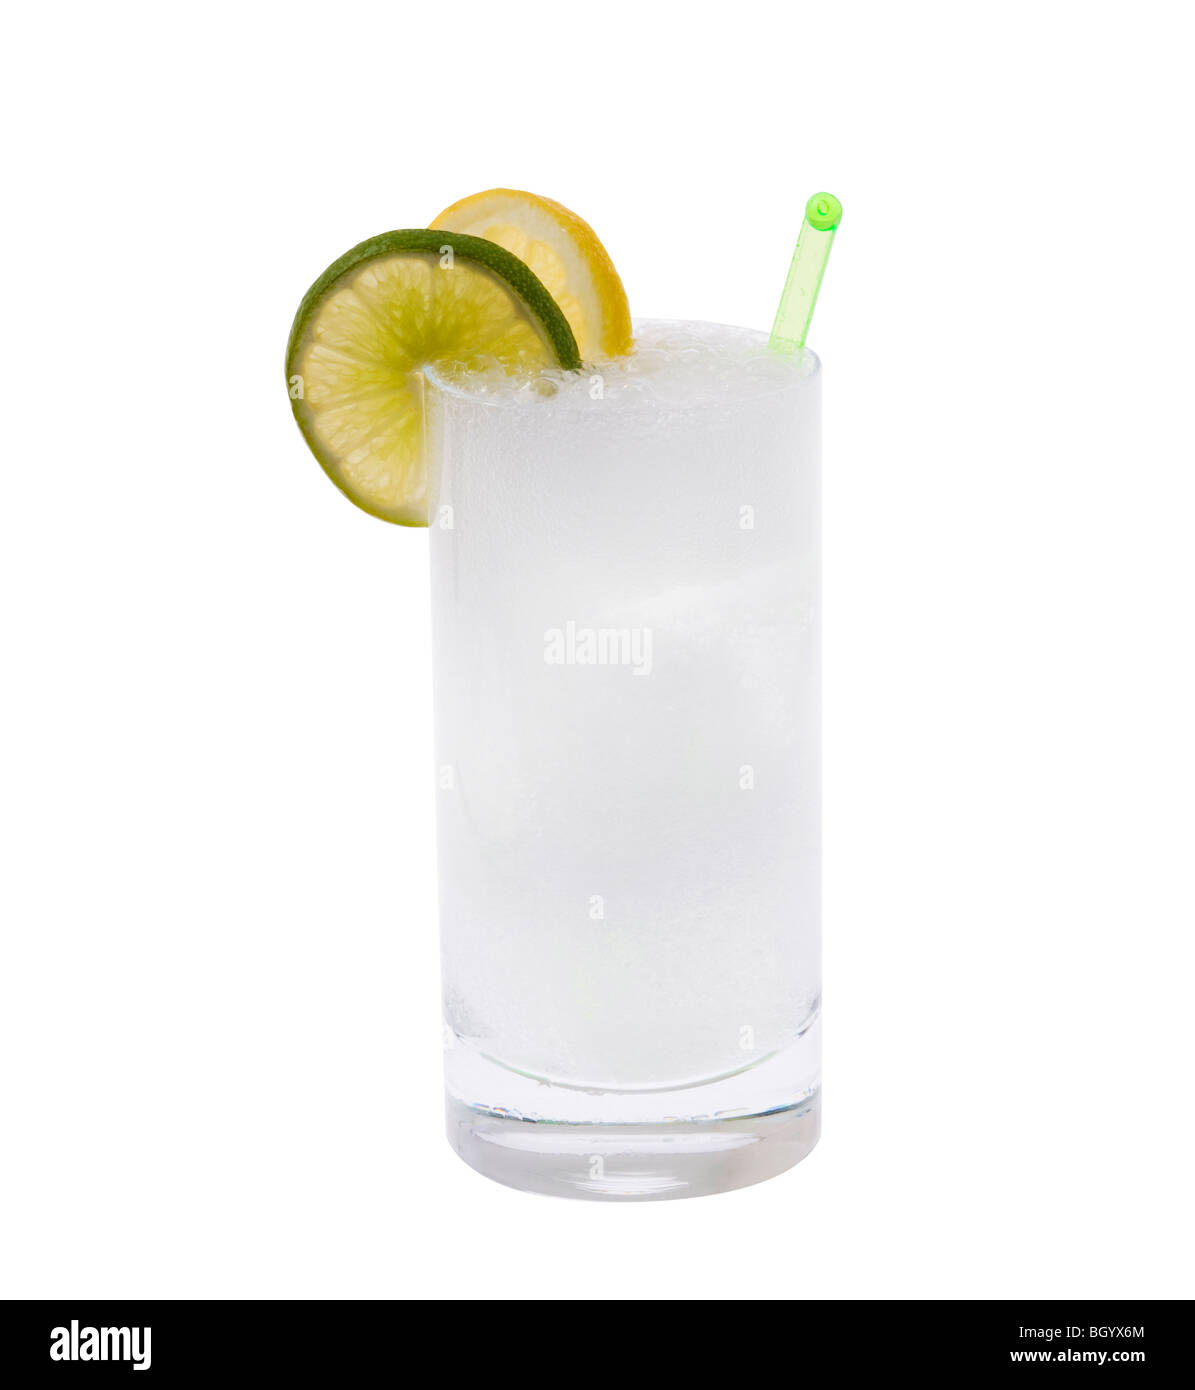 Vodka or Gin & Tonic mixed drink with lemon/line slice garnish on white background Stock Photo